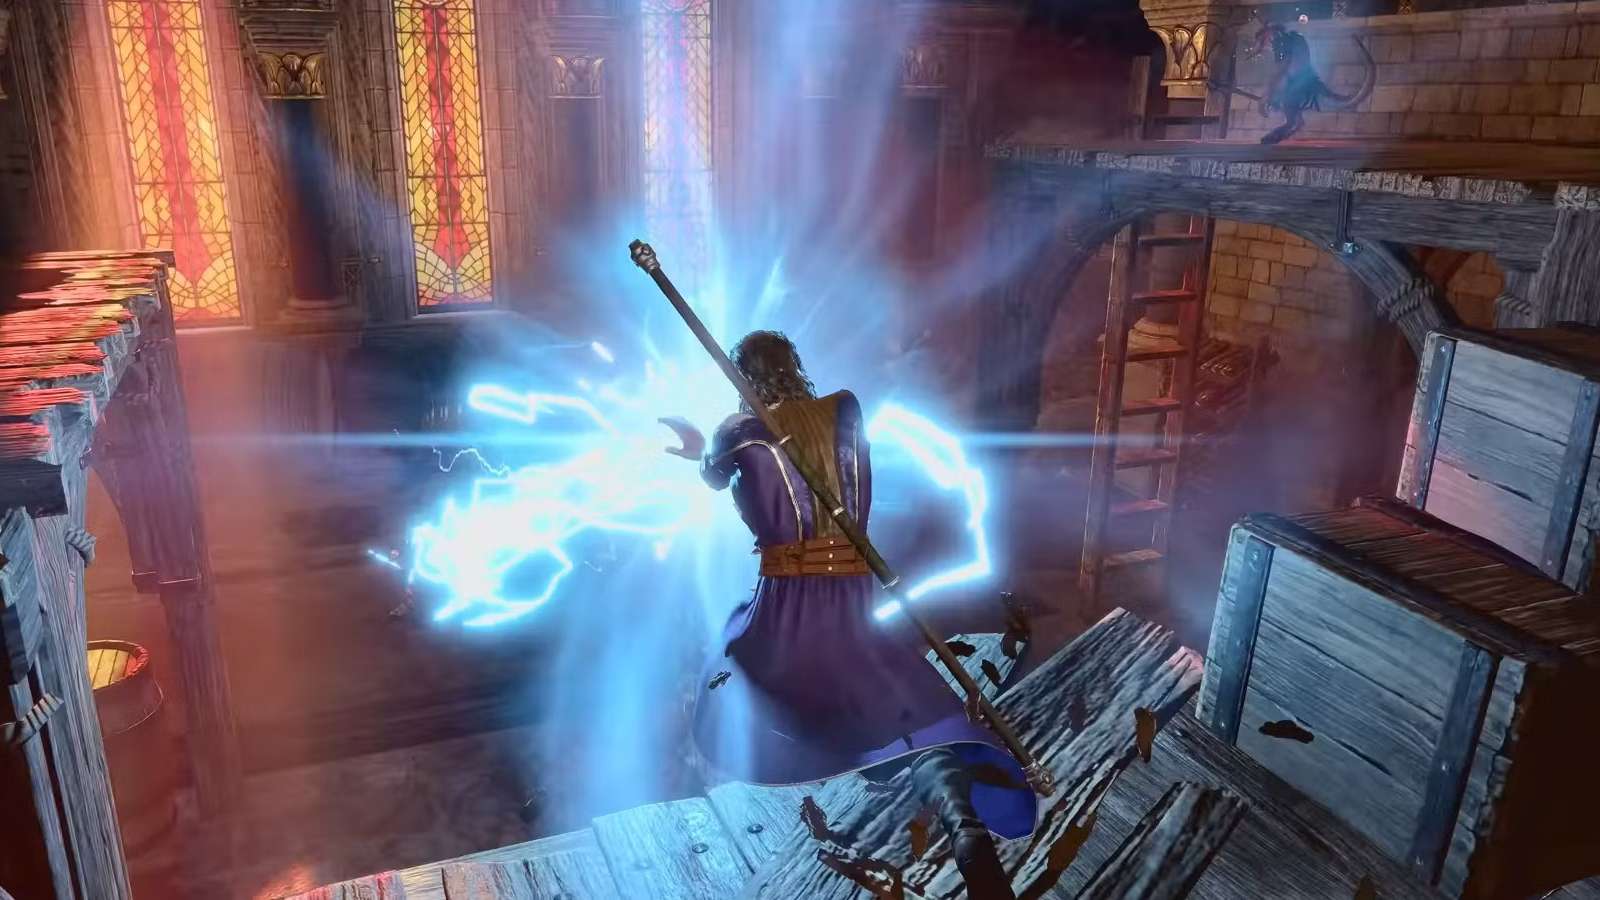 Gale casting a lightning spell in Baldur's Gate 3